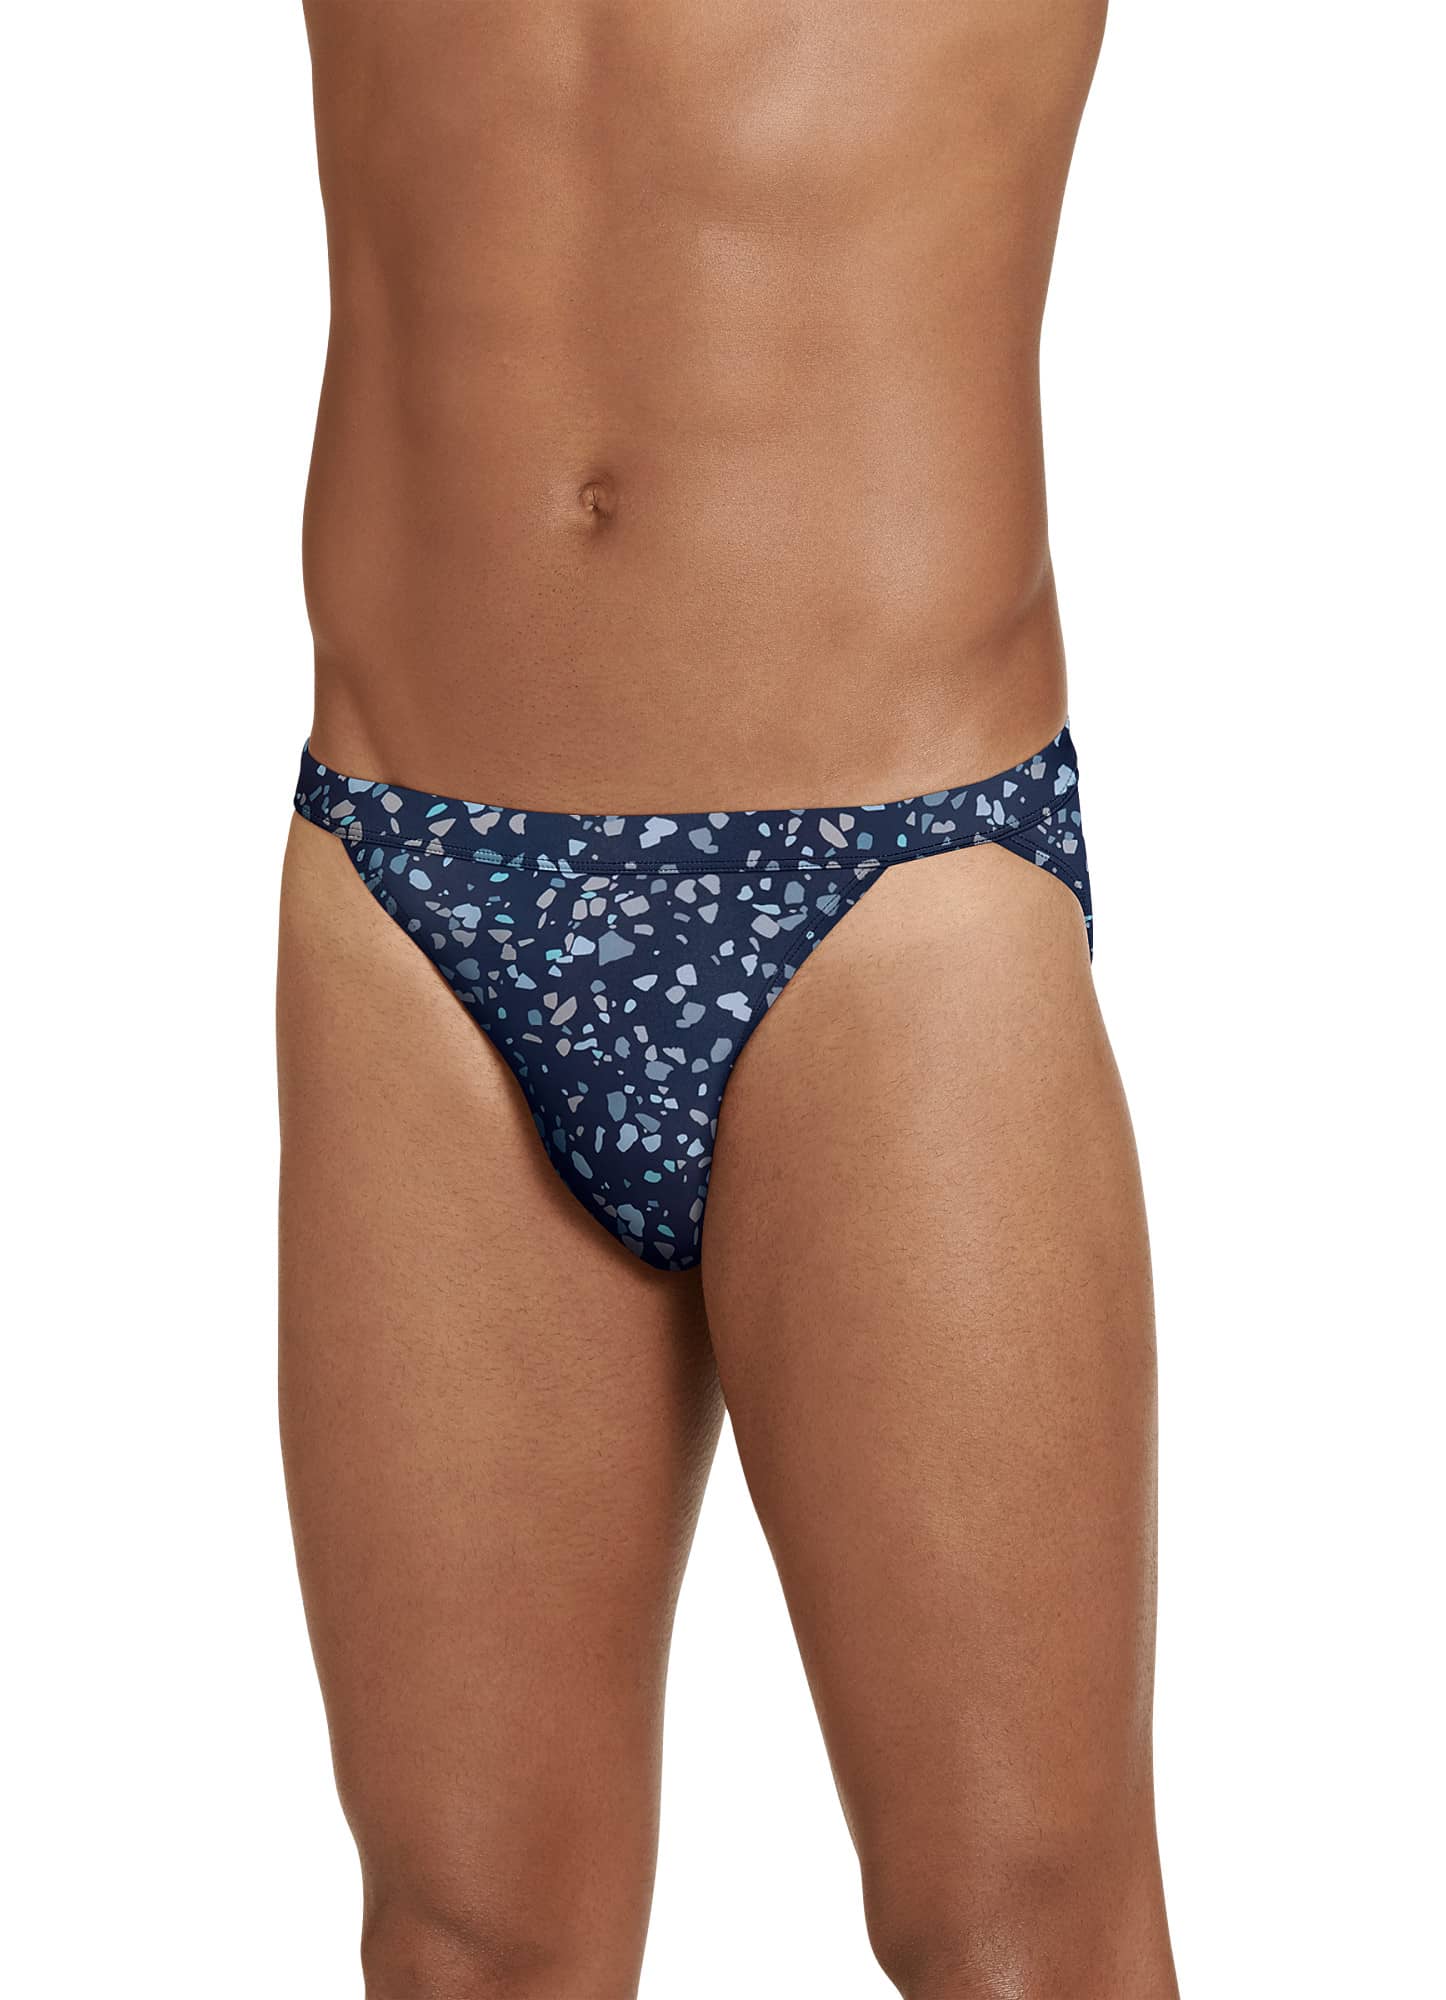 Buy Jockey Men's Underwear Elance String Bikini - 2 Pack online